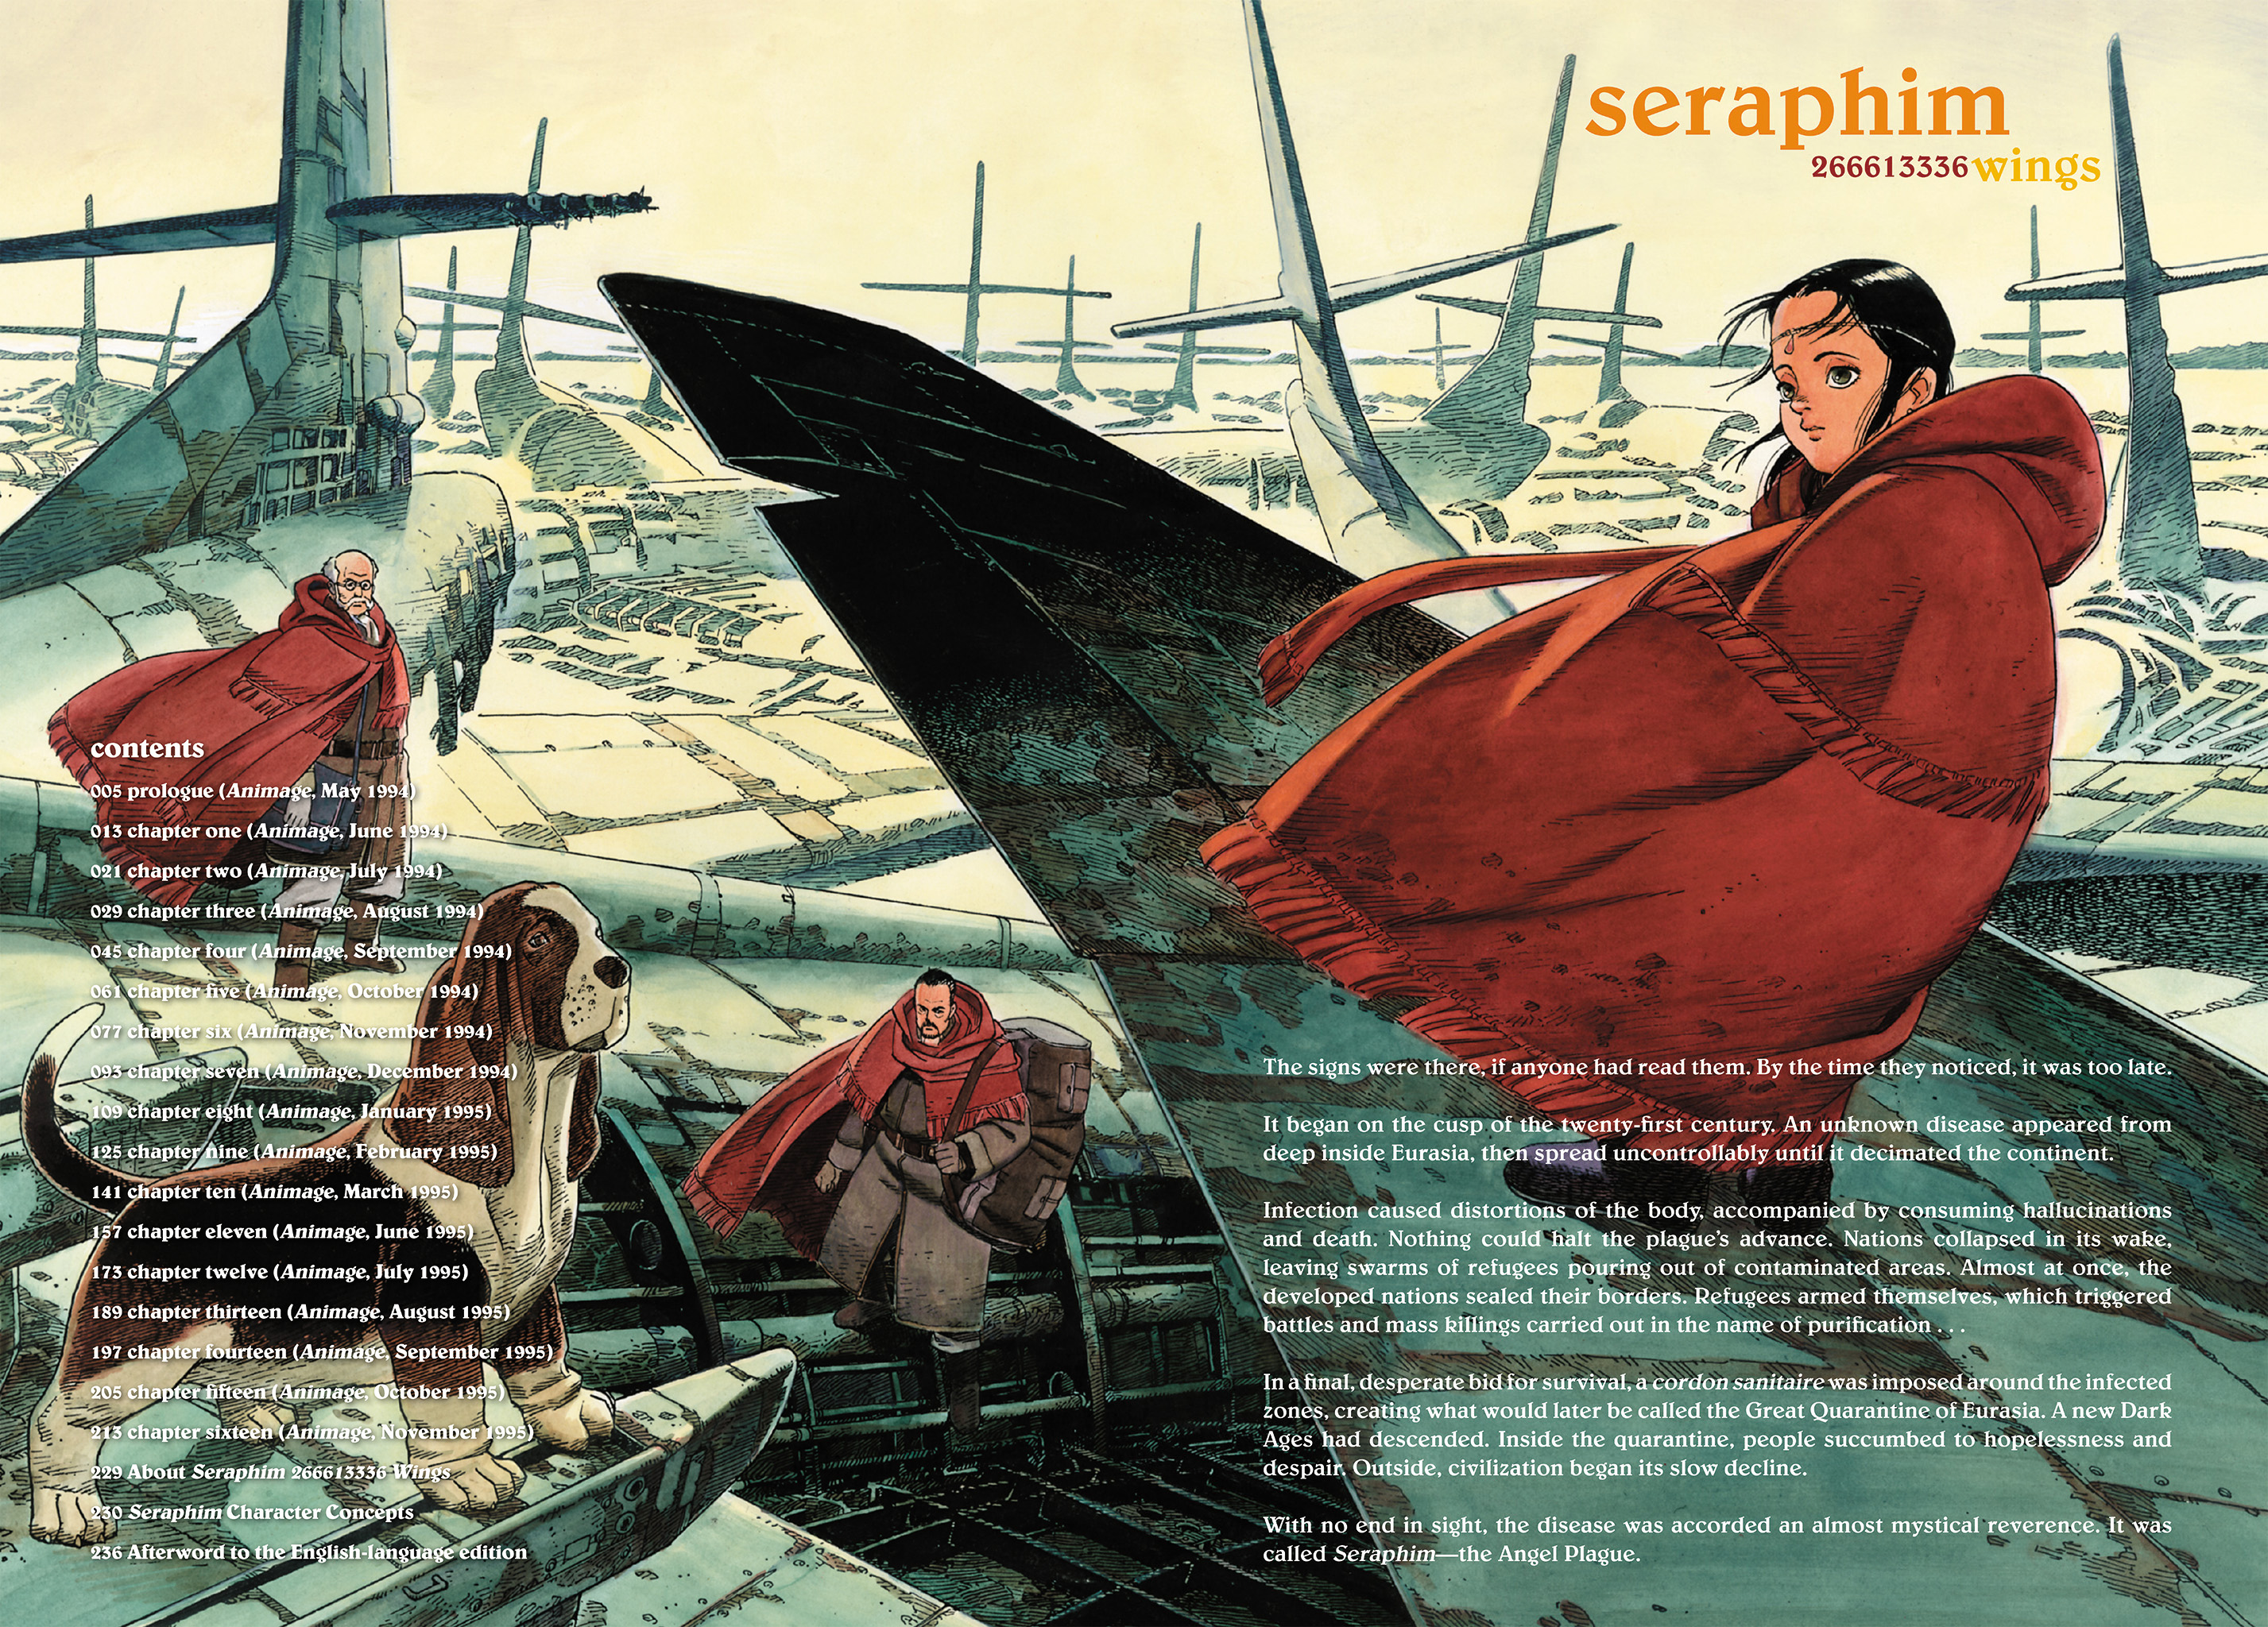 Read online Seraphim 266613336 Wings comic -  Issue # TPB - 3